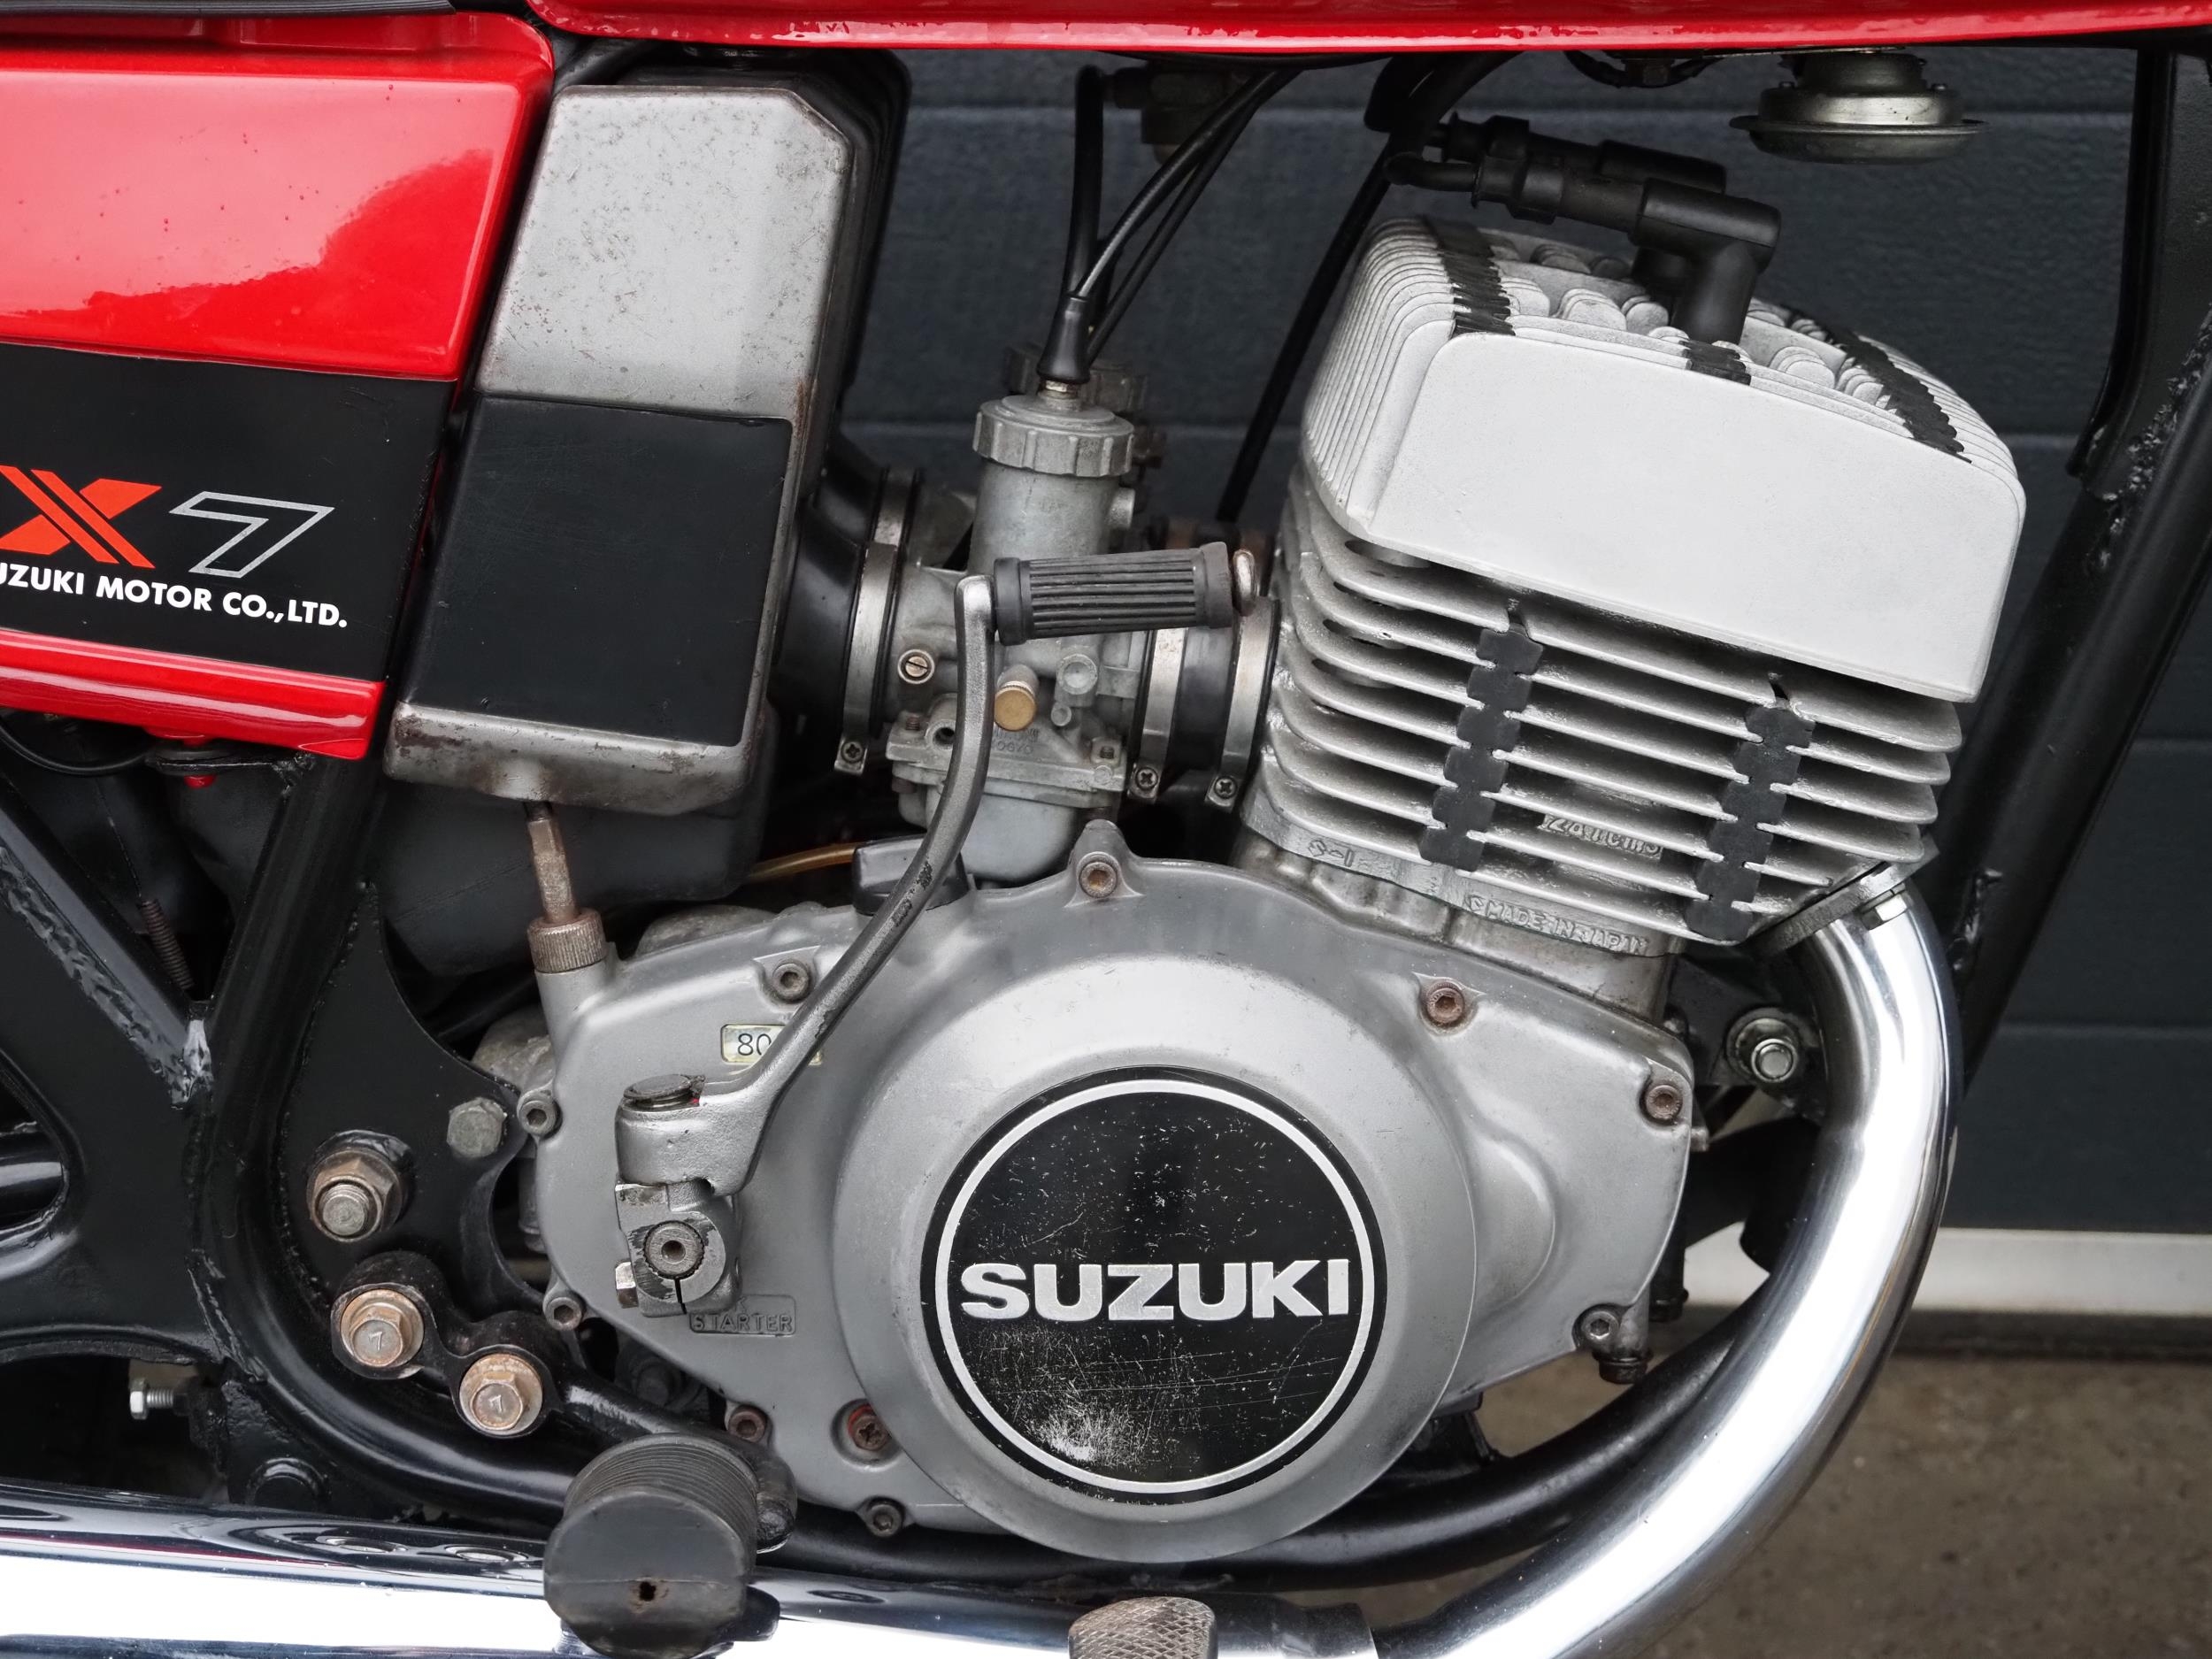 Suzuki X7 249cc. 1979. Frame No. GT2502-508028 Engine No. 111252 Runs and rides. Needs light - Image 5 of 6